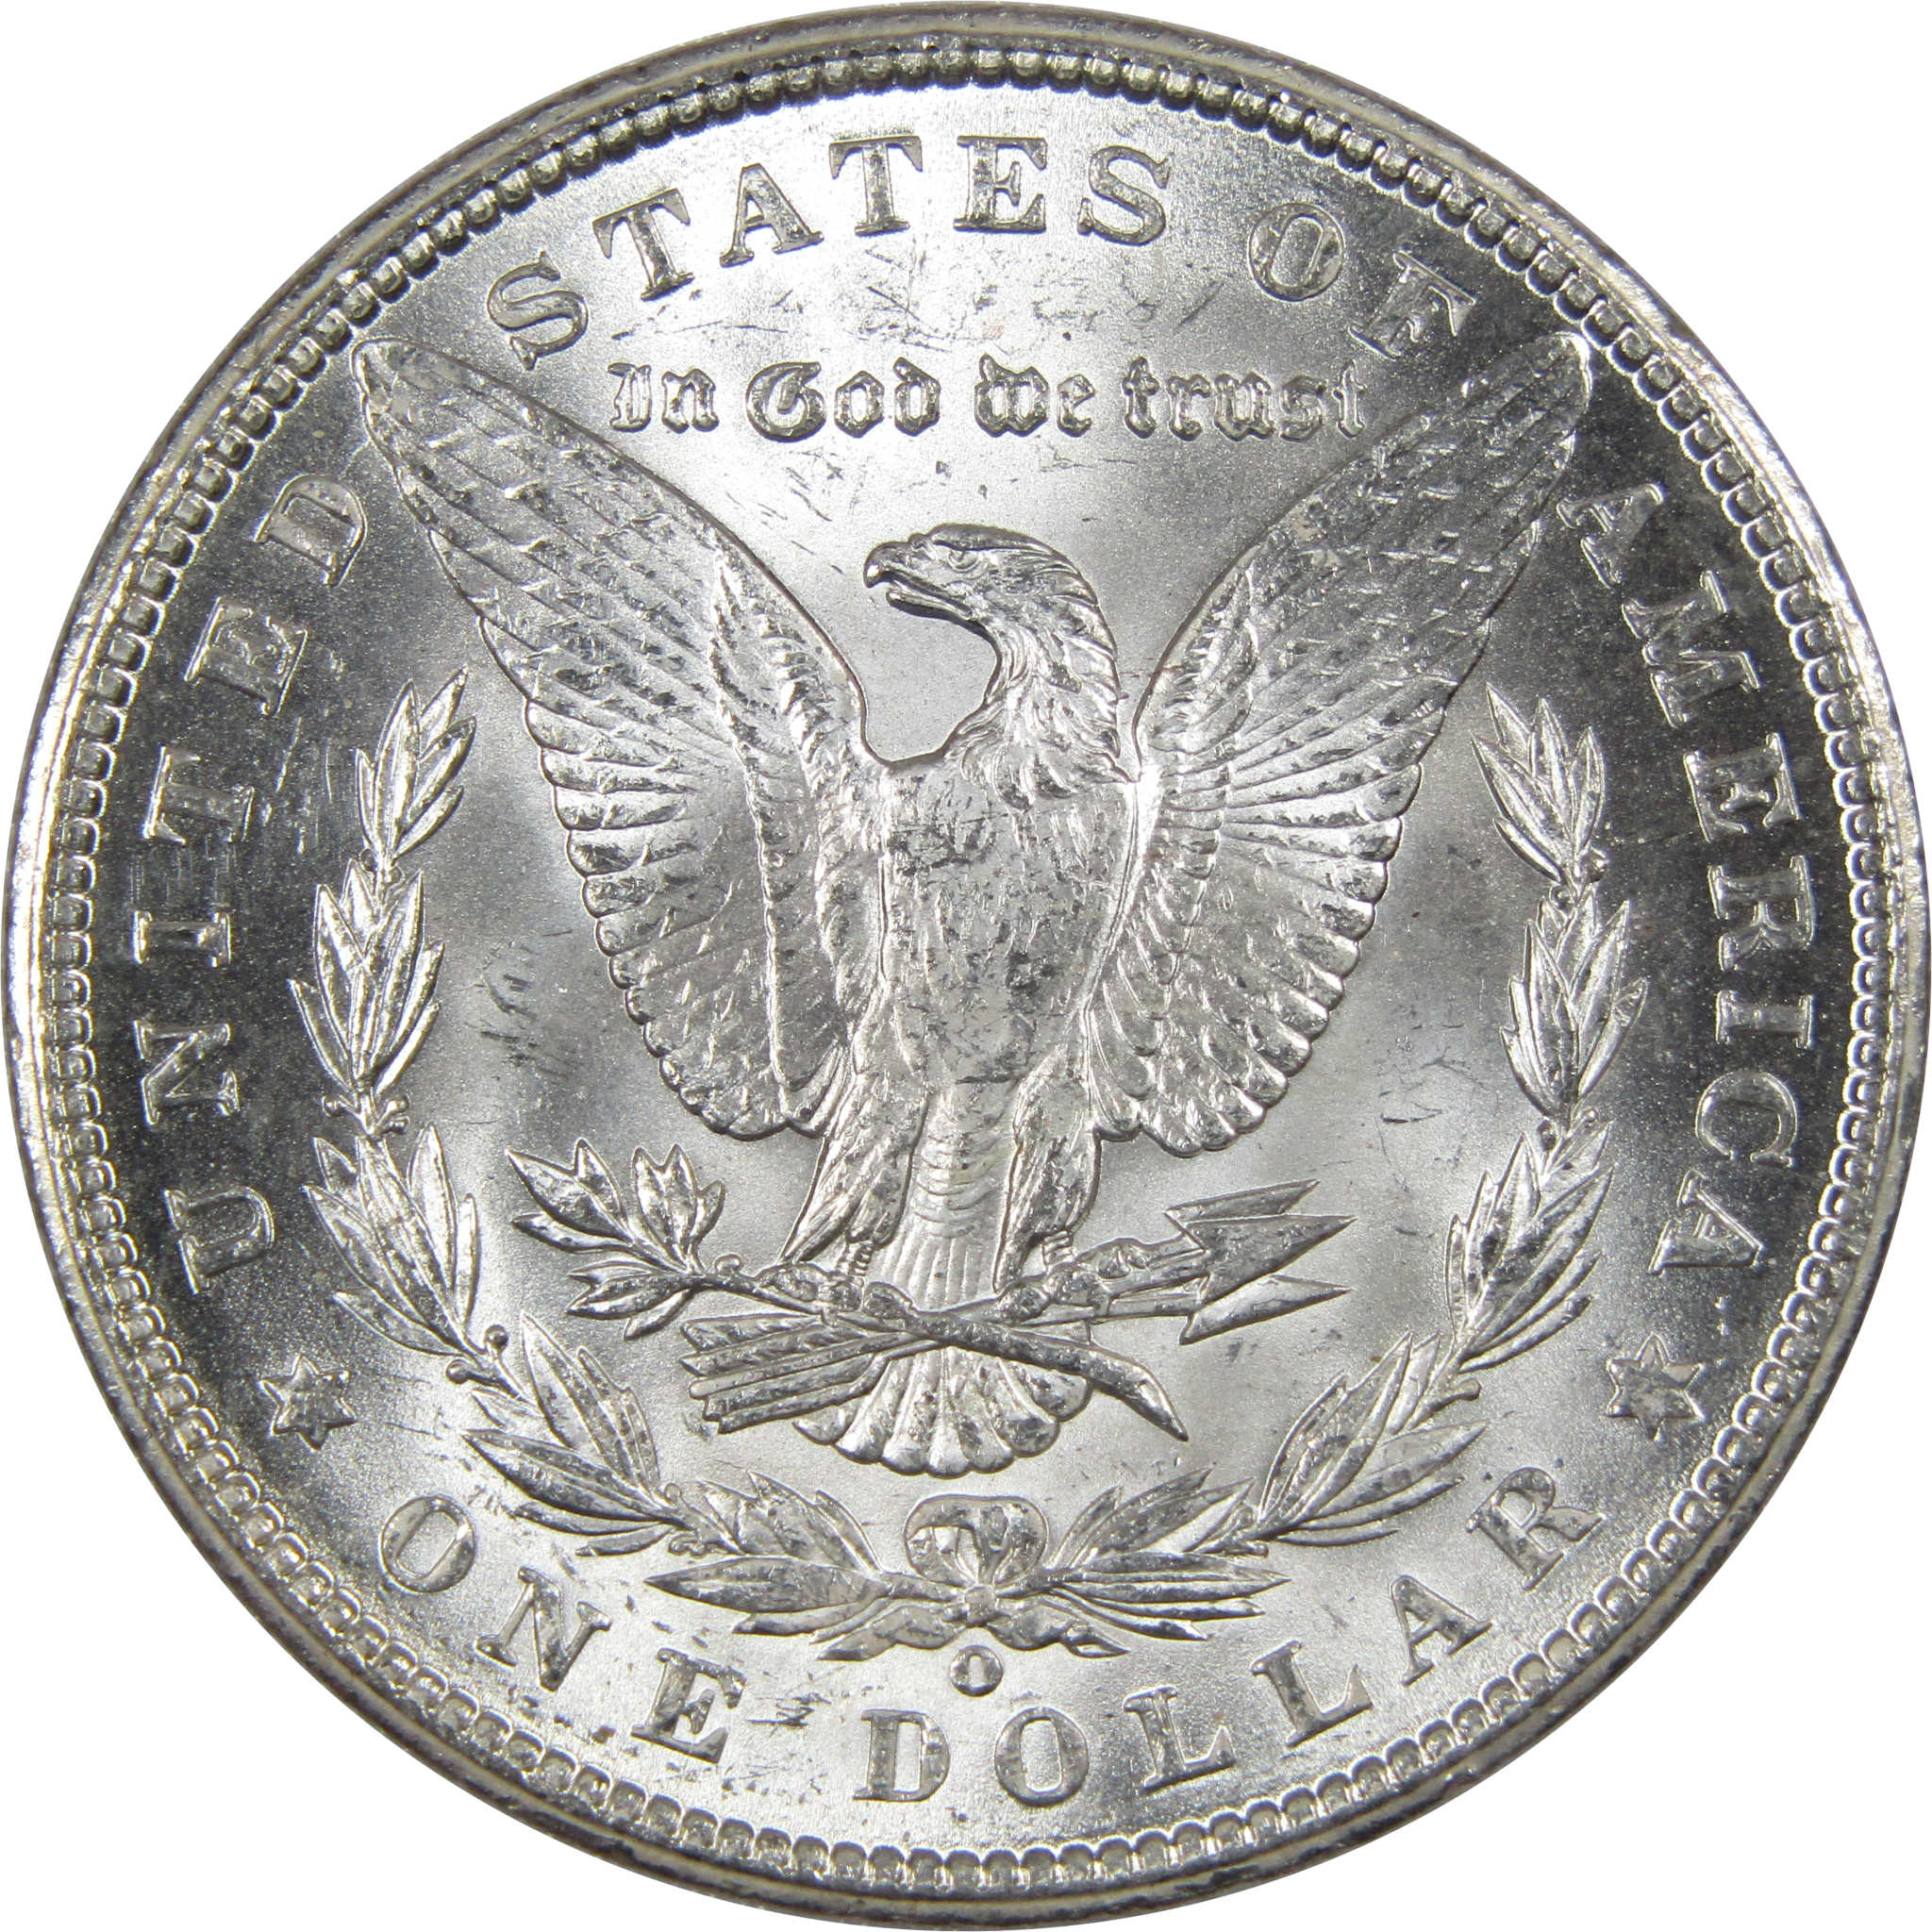 1900 O Morgan Dollar BU Uncirculated Mint State 90% Silver SKU:IPC9794 - Morgan coin - Morgan silver dollar - Morgan silver dollar for sale - Profile Coins &amp; Collectibles